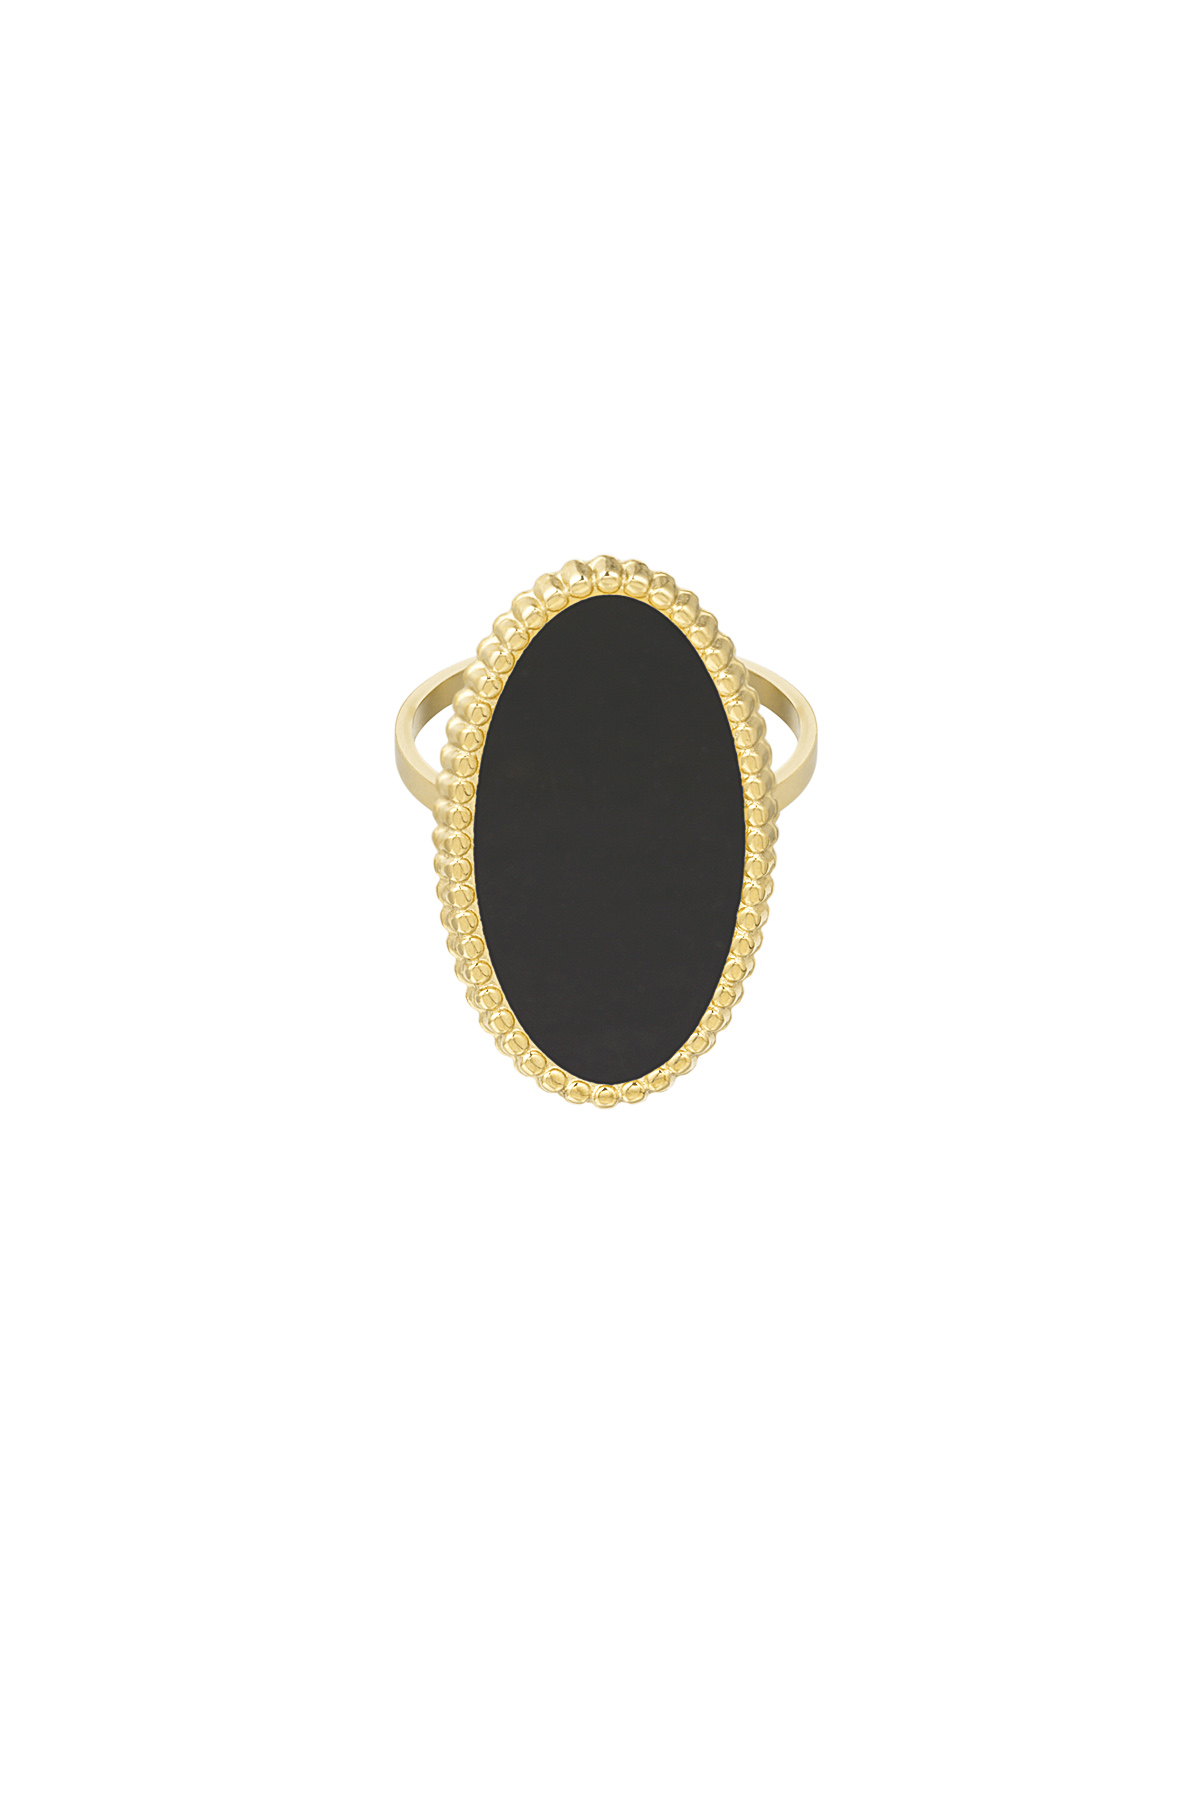 Ring vintage edge - gold/black h5 